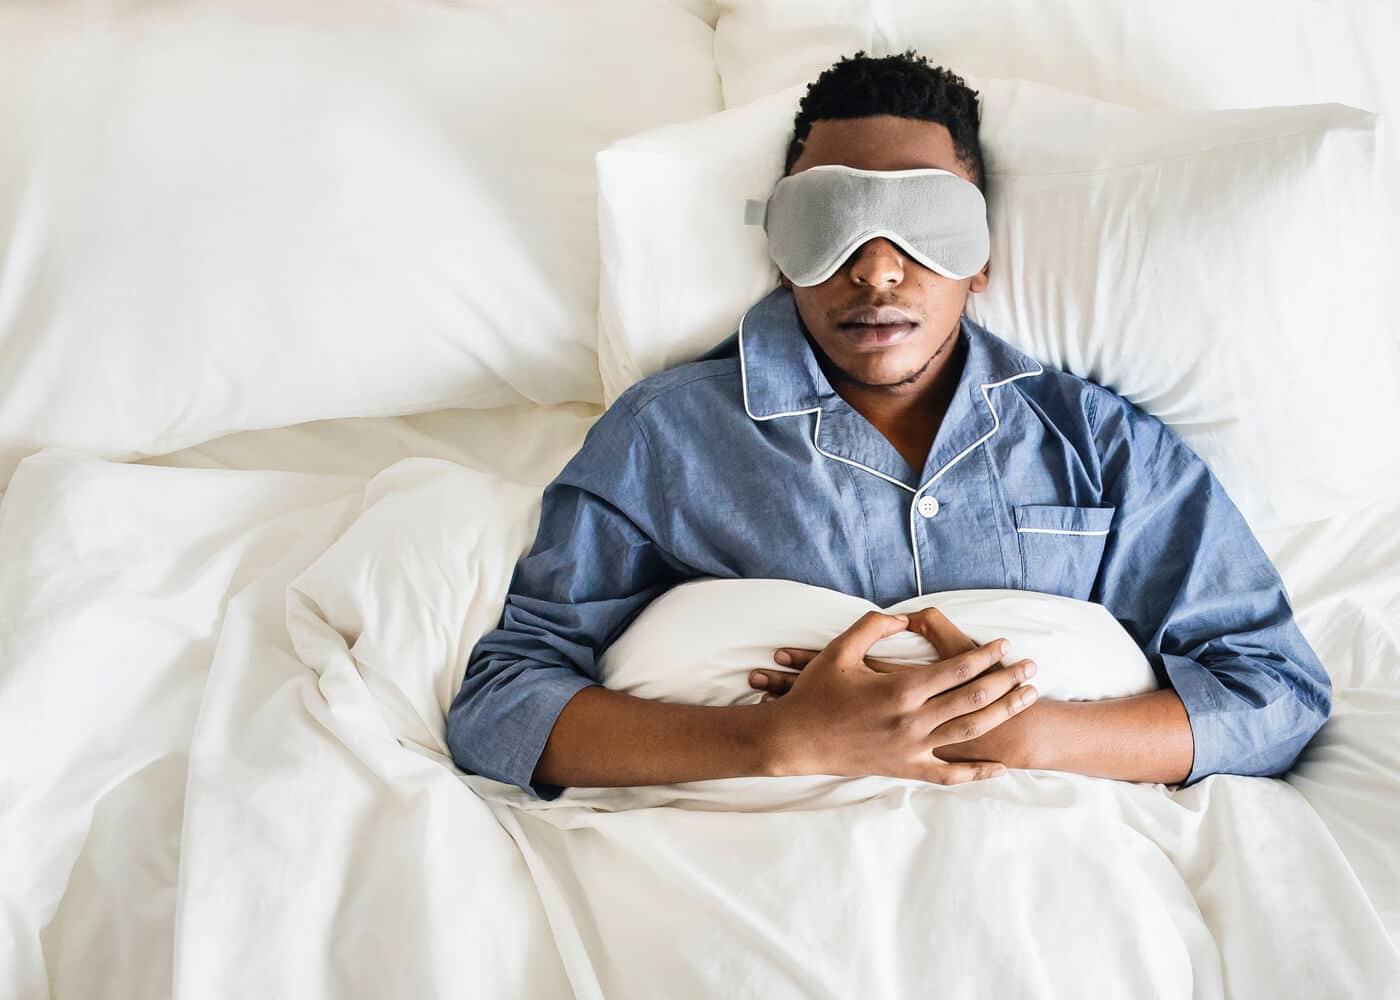 How to Sleep with Cervical Radiculopathy